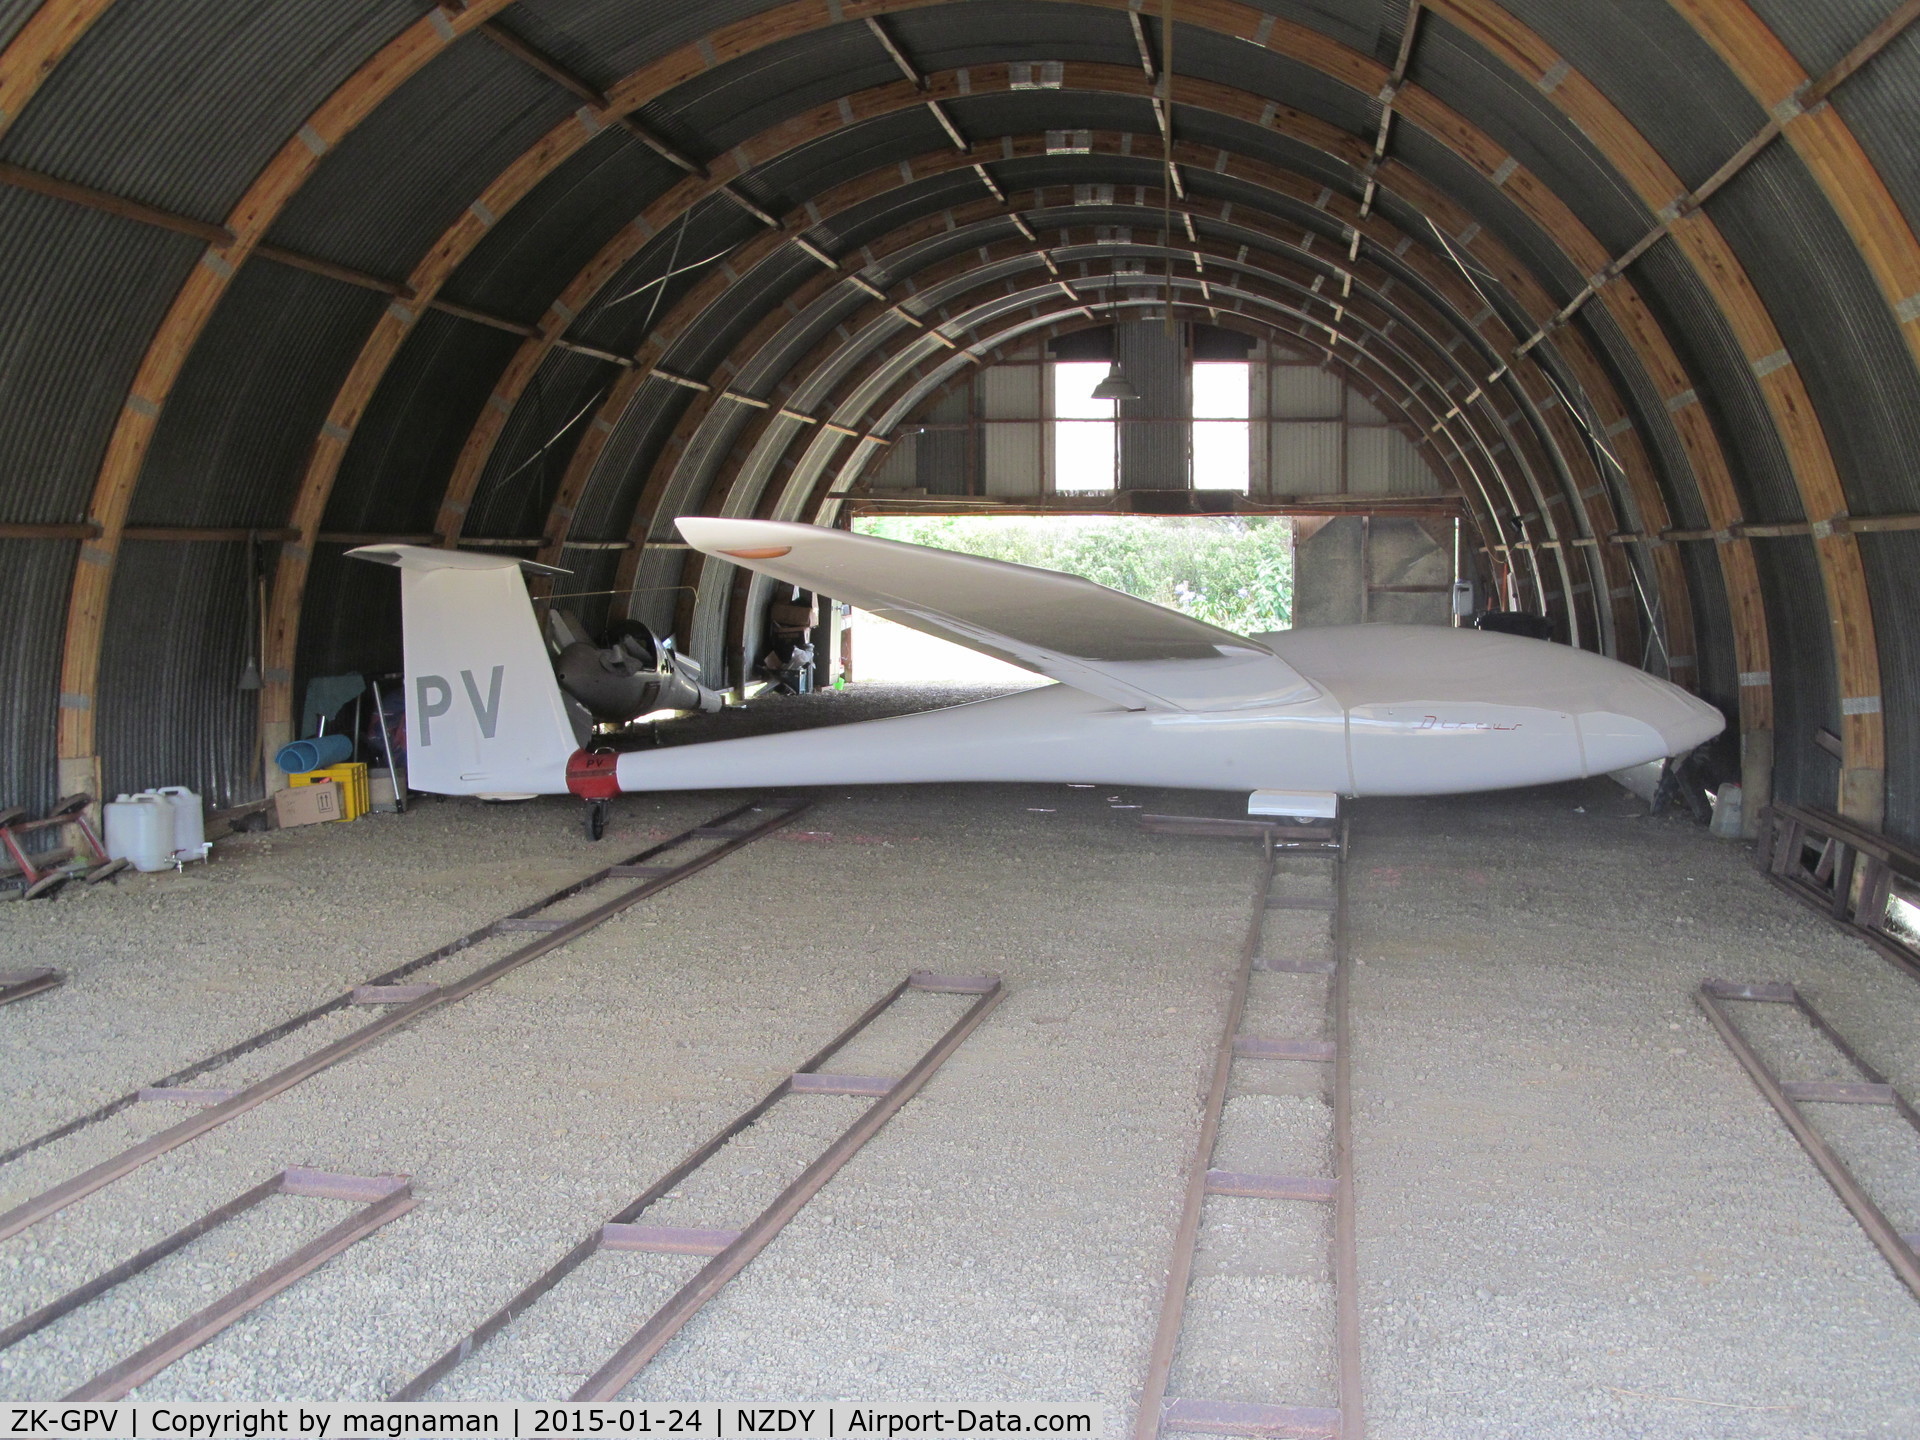 ZK-GPV, Schempp-Hirth Discus b C/N 120, in hangar by runway